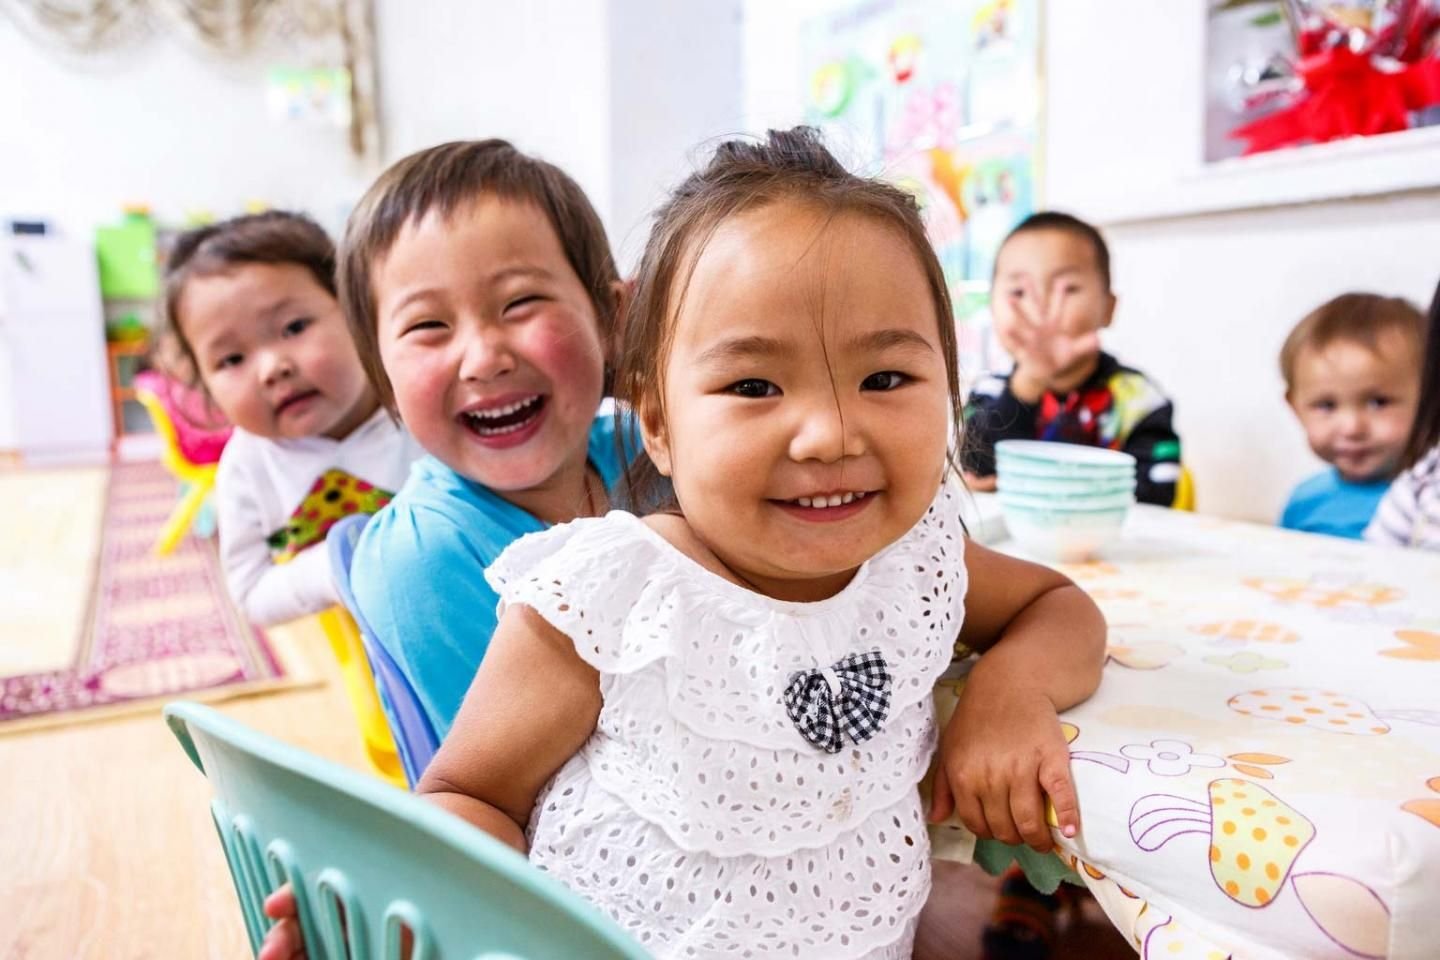 Картинка дети казахстана. Дети Казахстана. Казахстан дети в садике. Малыш казах. Азиатские дети в садике.